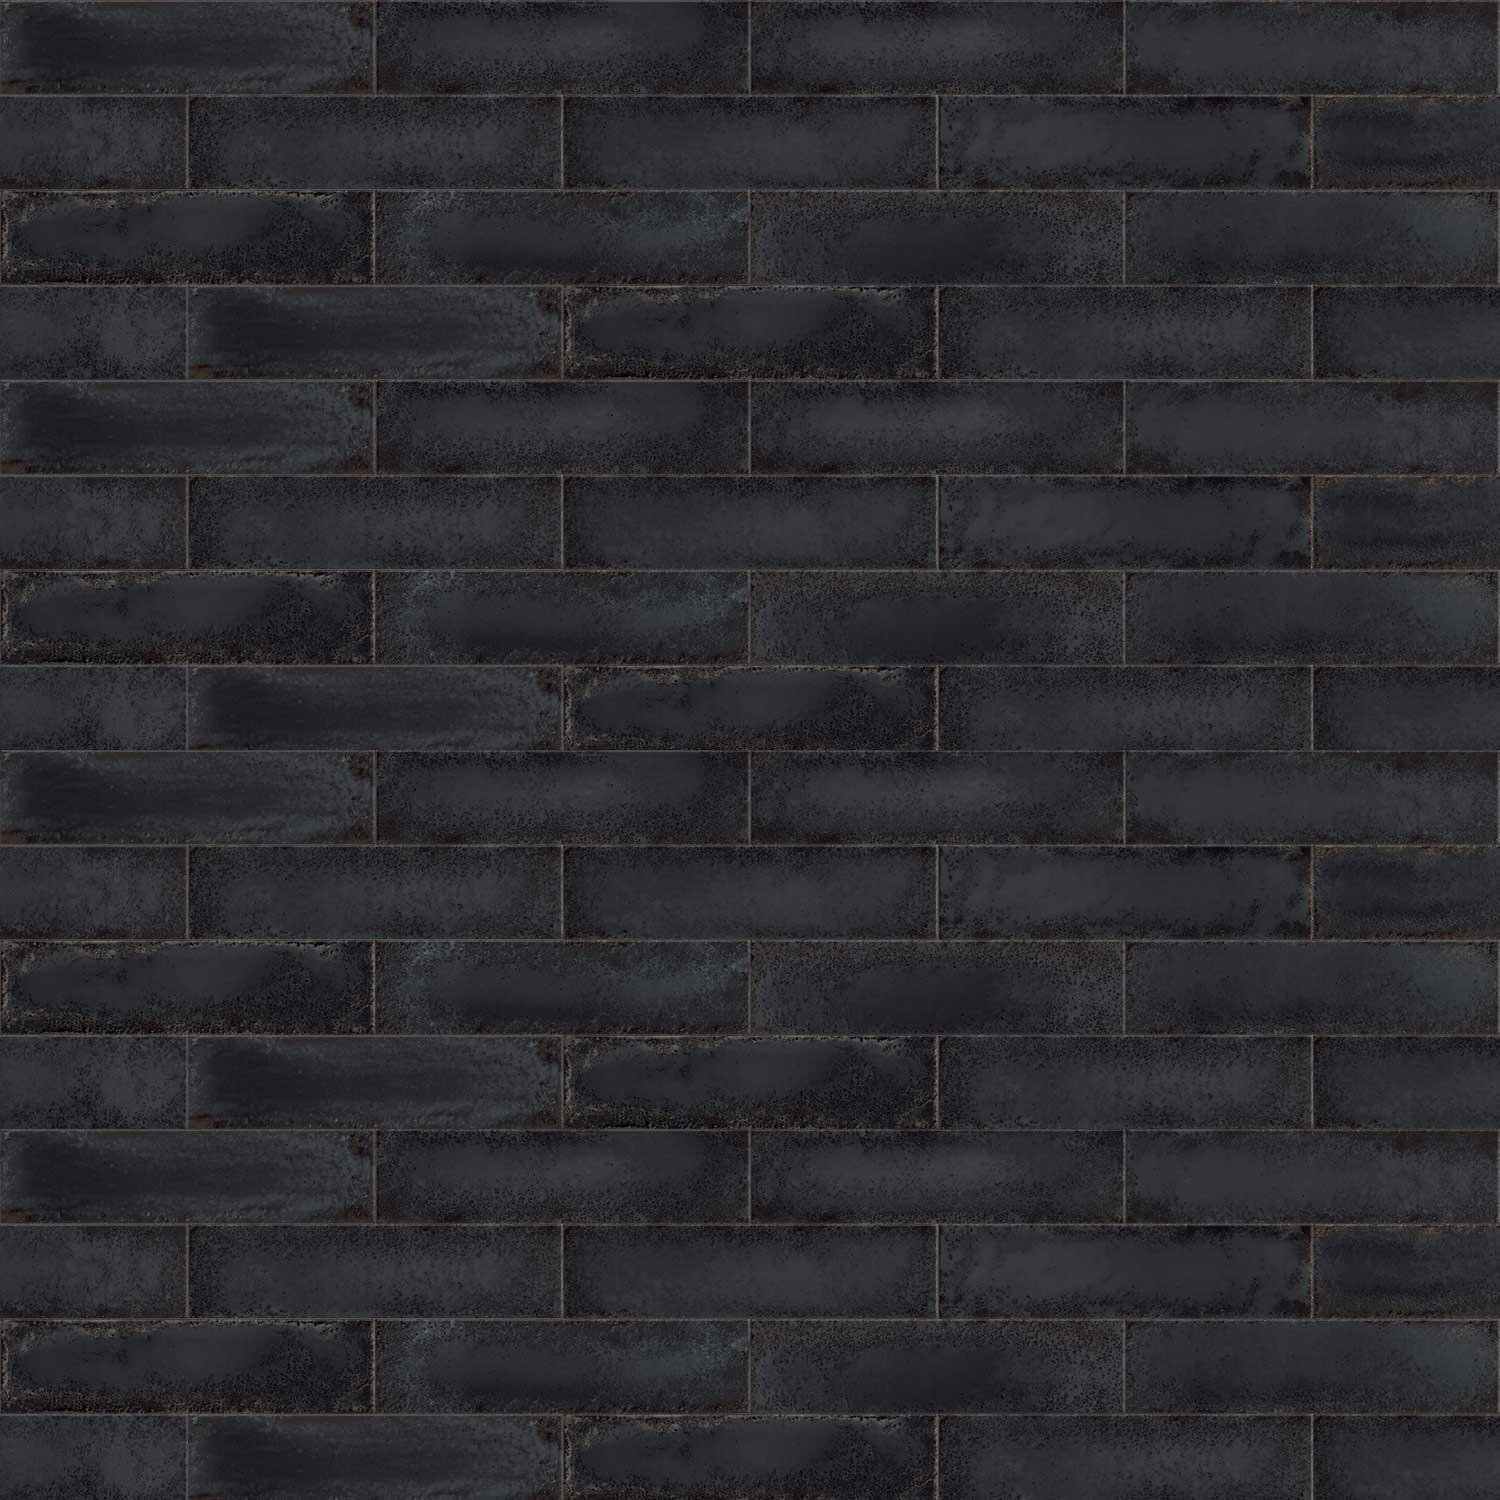 Titan Black Porcelain Wall Tile Gloss Indoor Subway Brick 60x240mm